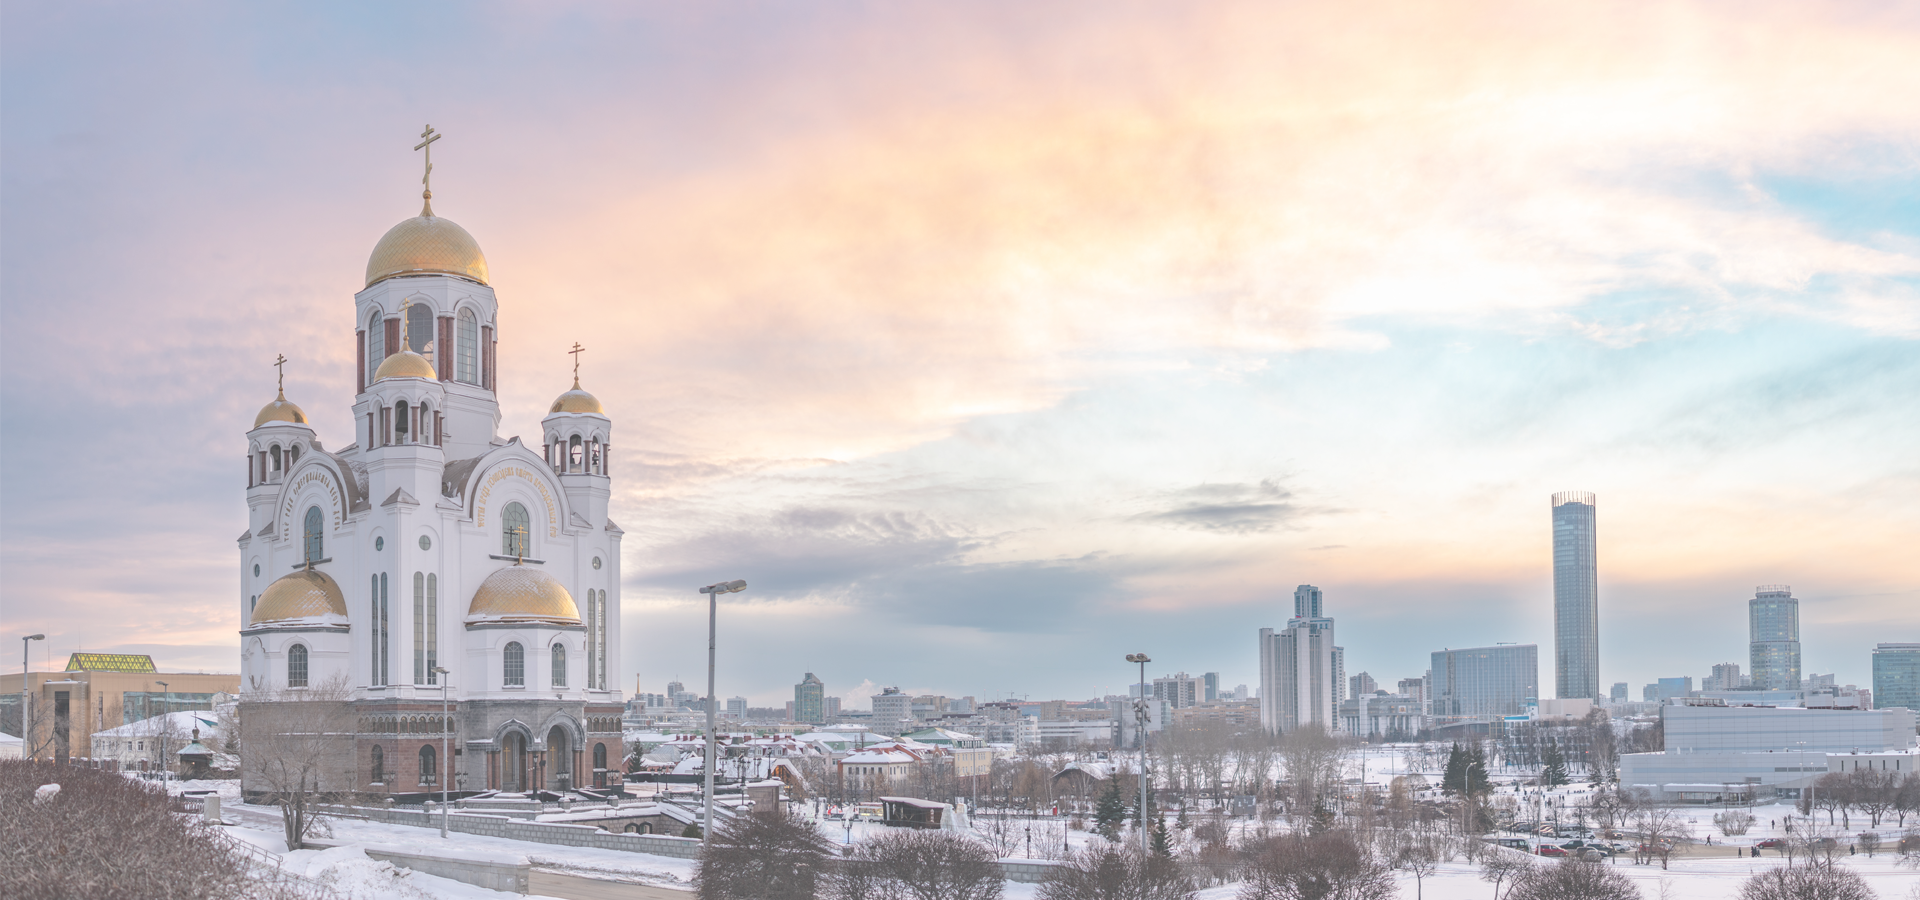 <b>Yekaterinburg, Sverdlovsk Oblast, Ural Federal district, Russia</b>